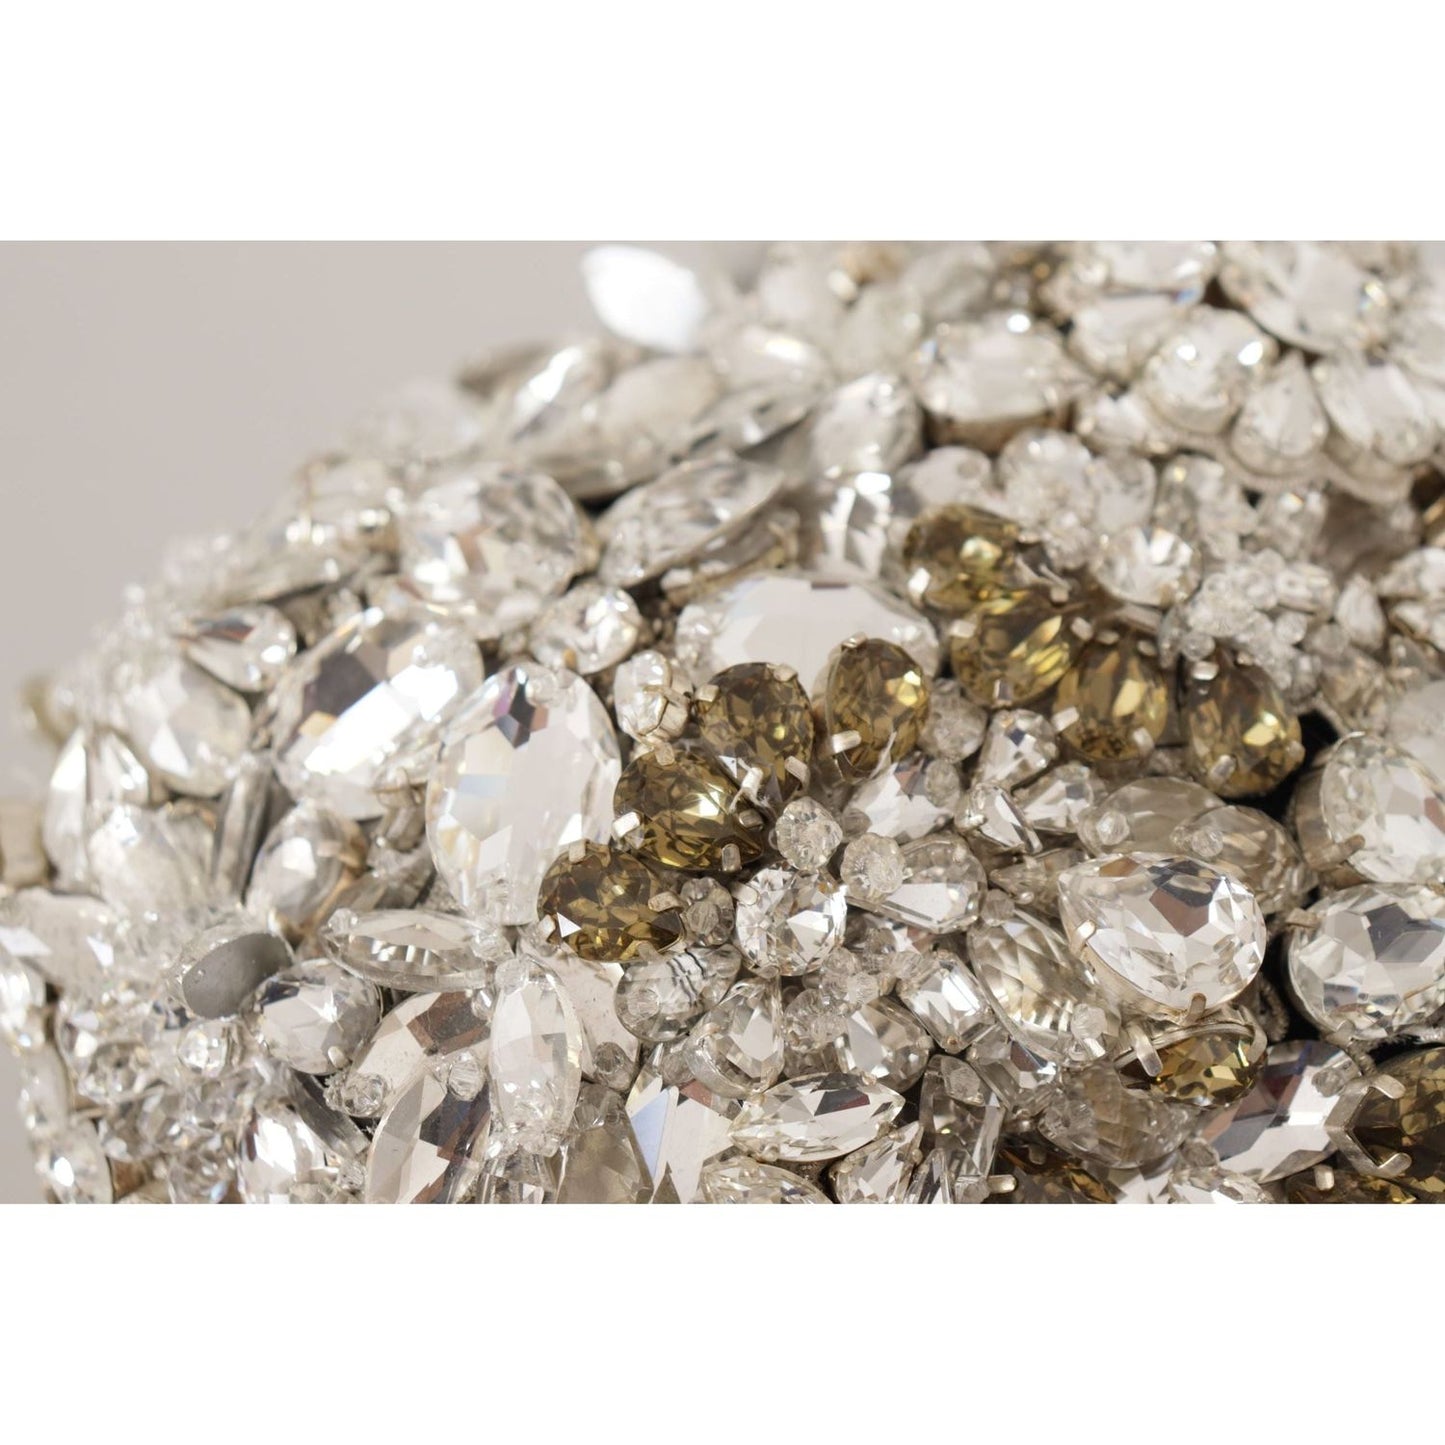 Dolce & Gabbana Elegant Crystal-Encrusted Cloche Hat silver-teardrop-beaded-casque-sequin-turban-headdress